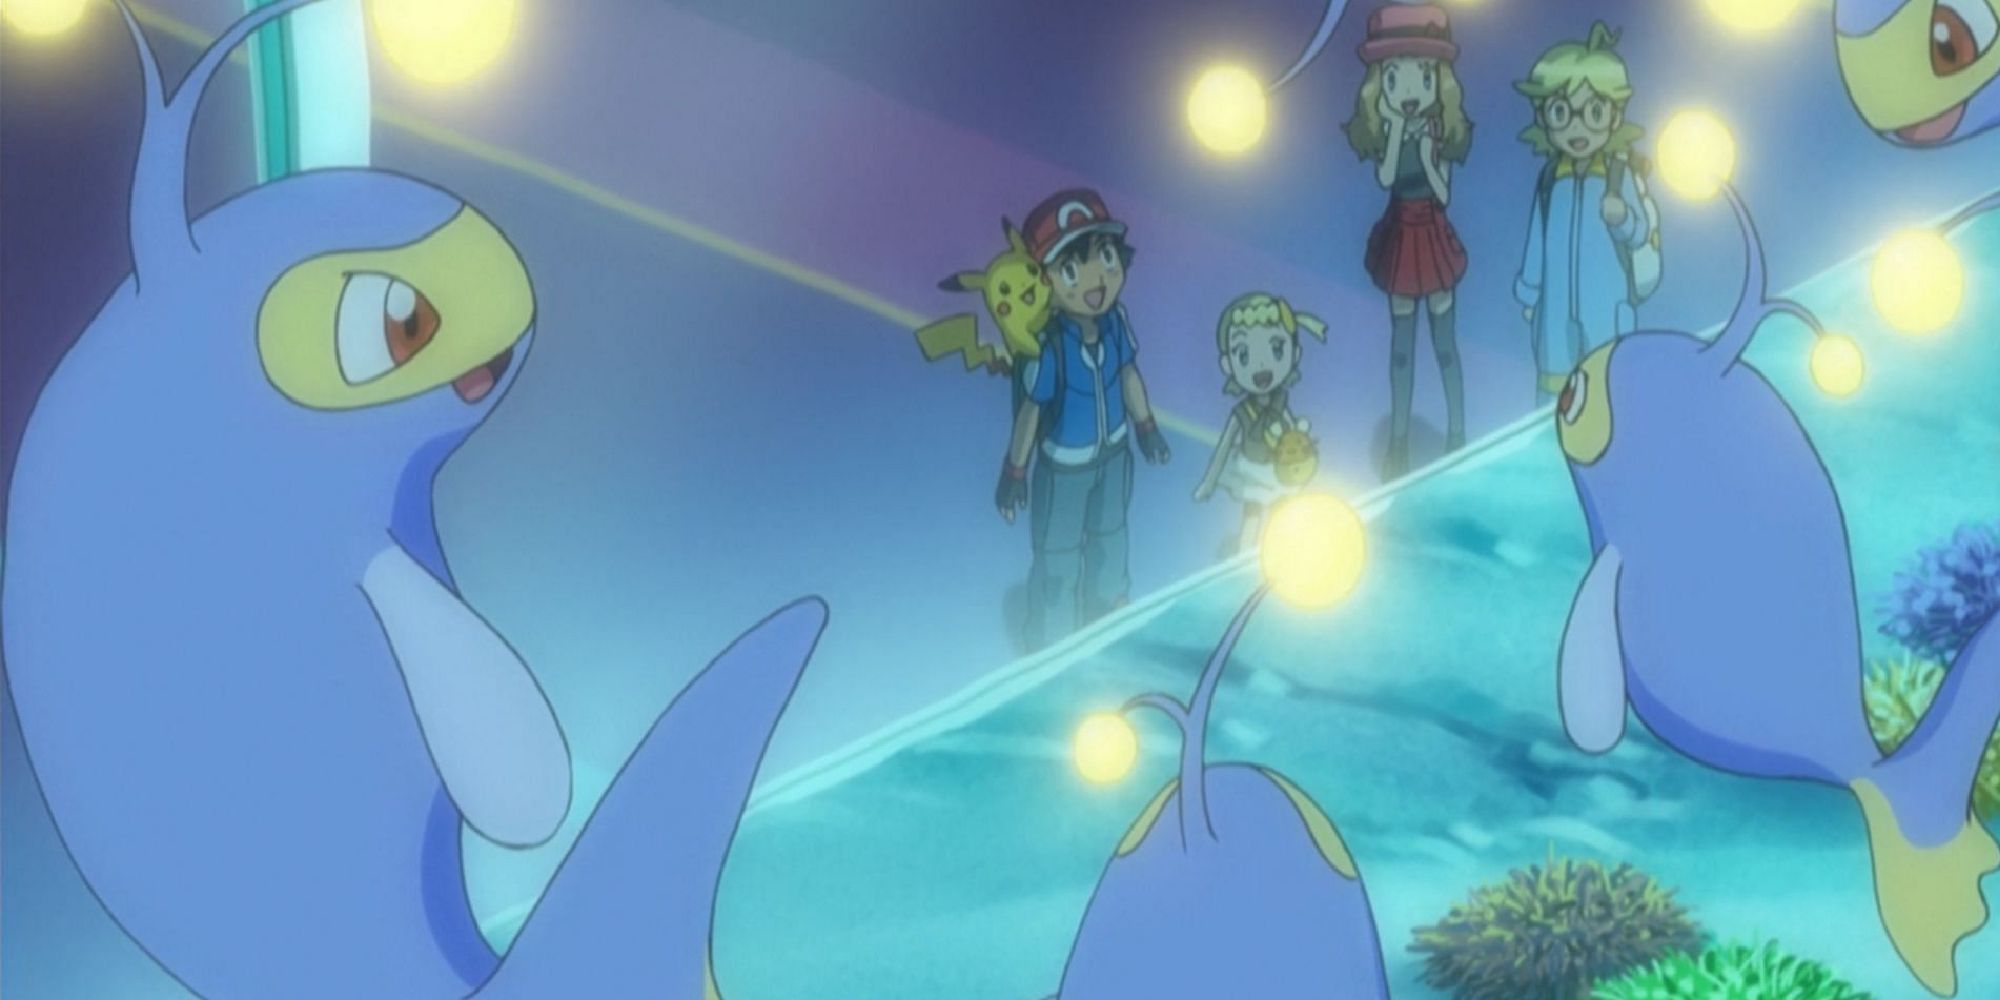 Ash, Pikachu, Serena, Clemont, and Bonnie admiring an aquarium filled with Lanterns